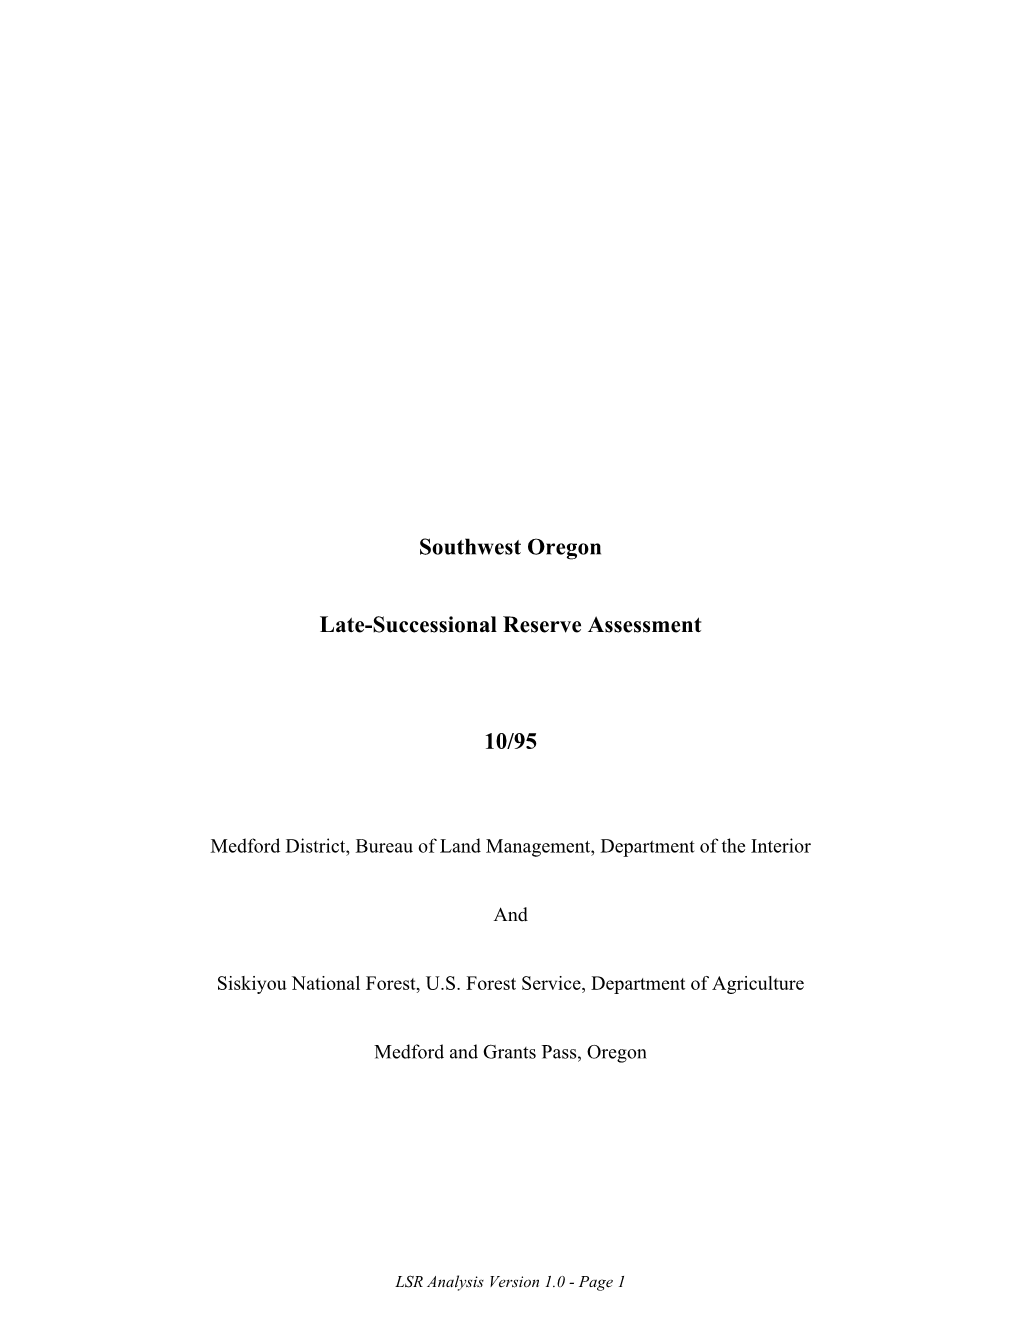 Southwest Oregon Late-Successional Reserve Assessment 10/95